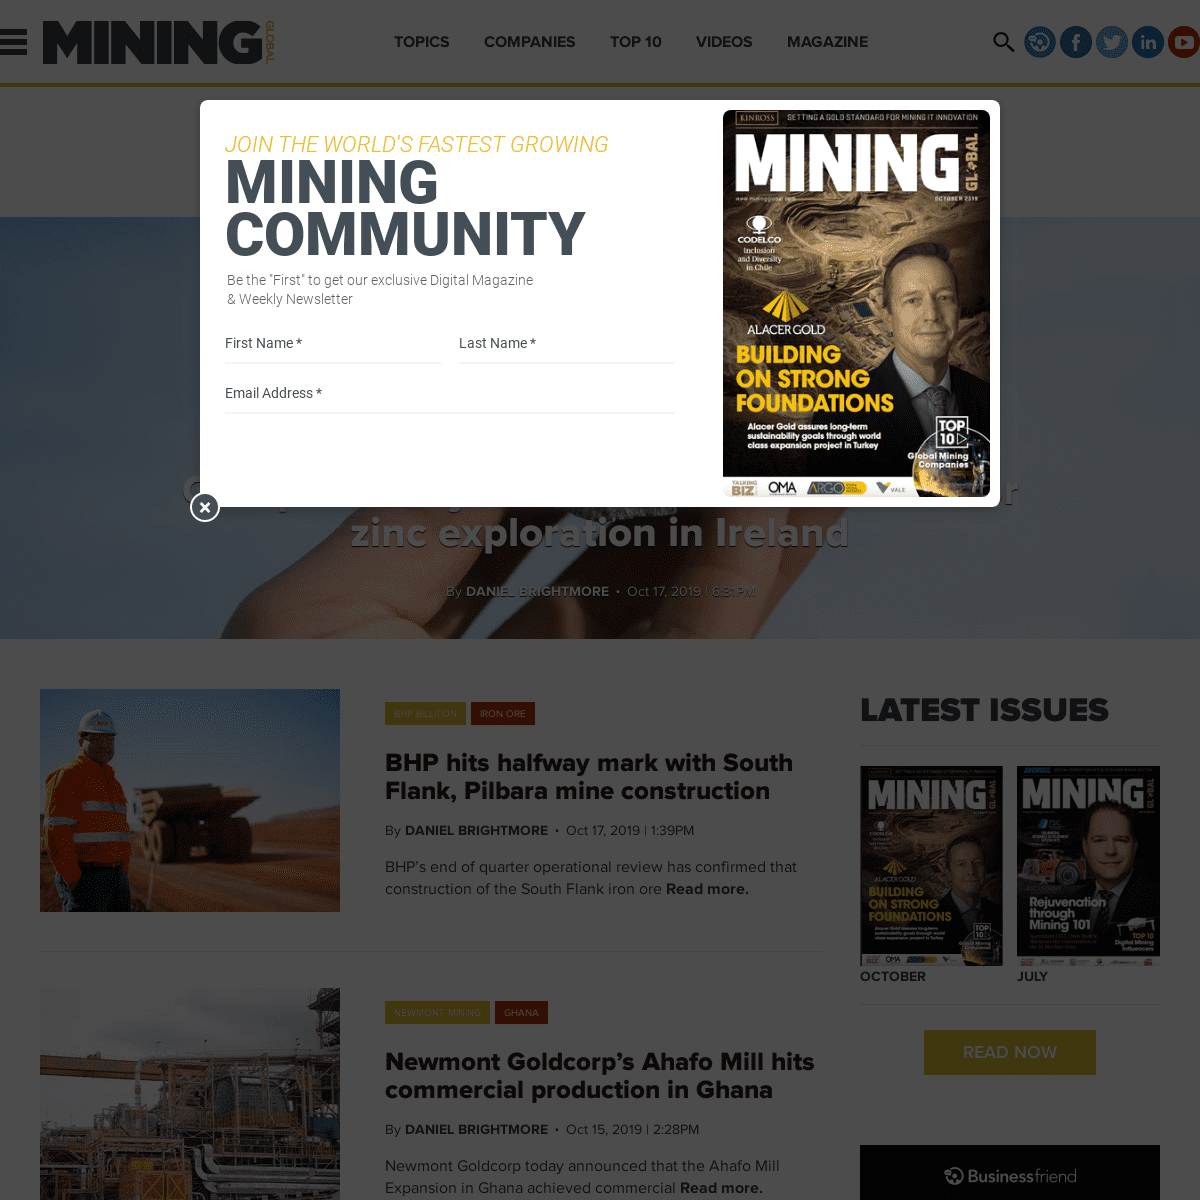 A complete backup of miningglobal.com